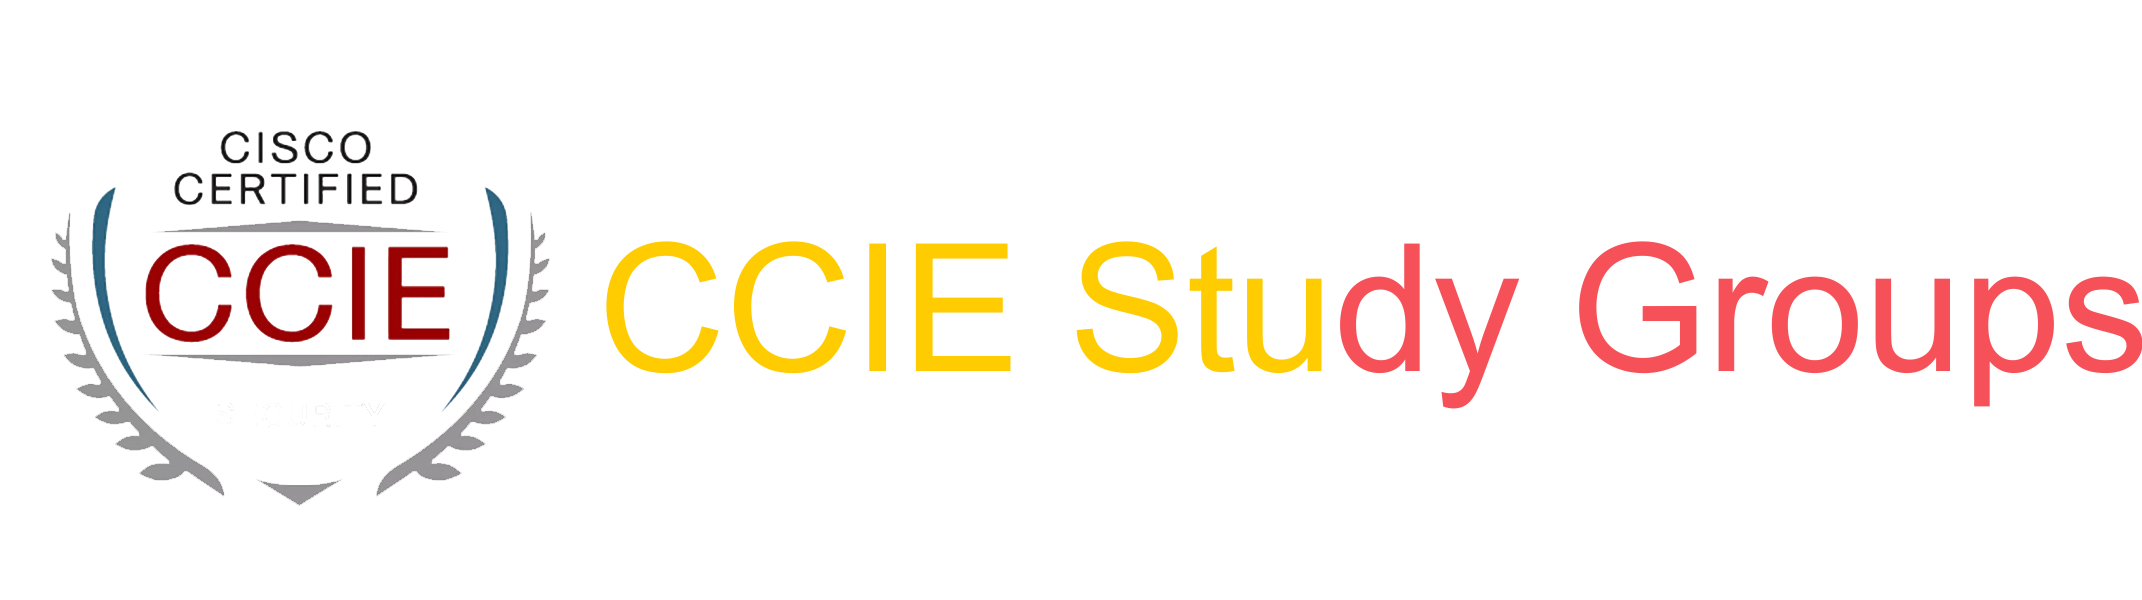 CCIE Study Groups